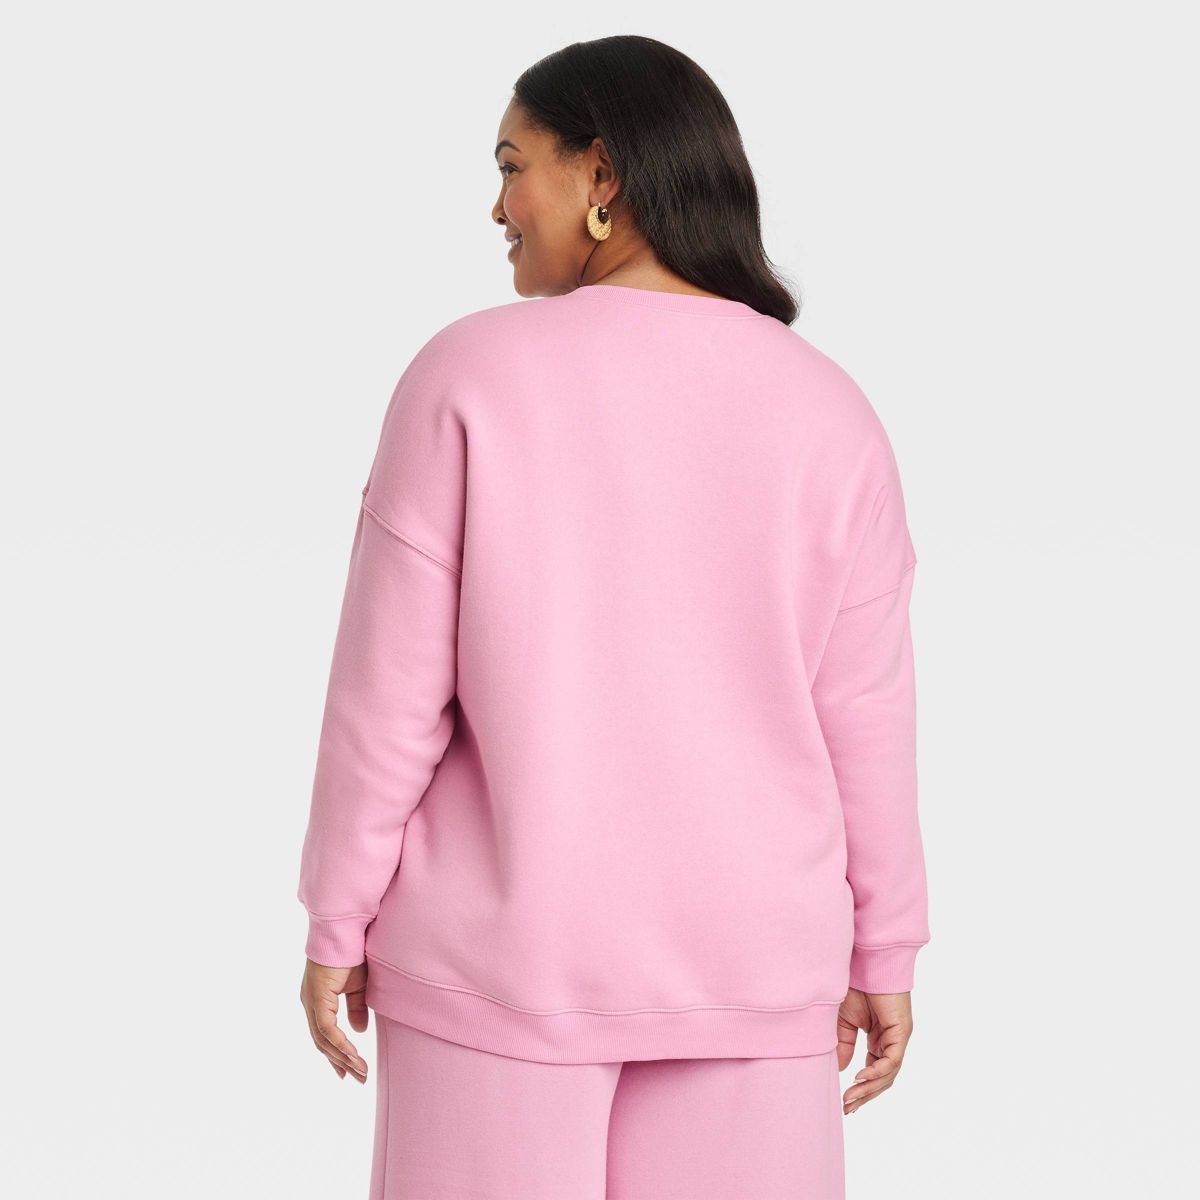 Women's Mama Graphic Sweatshirt - Pink | Target